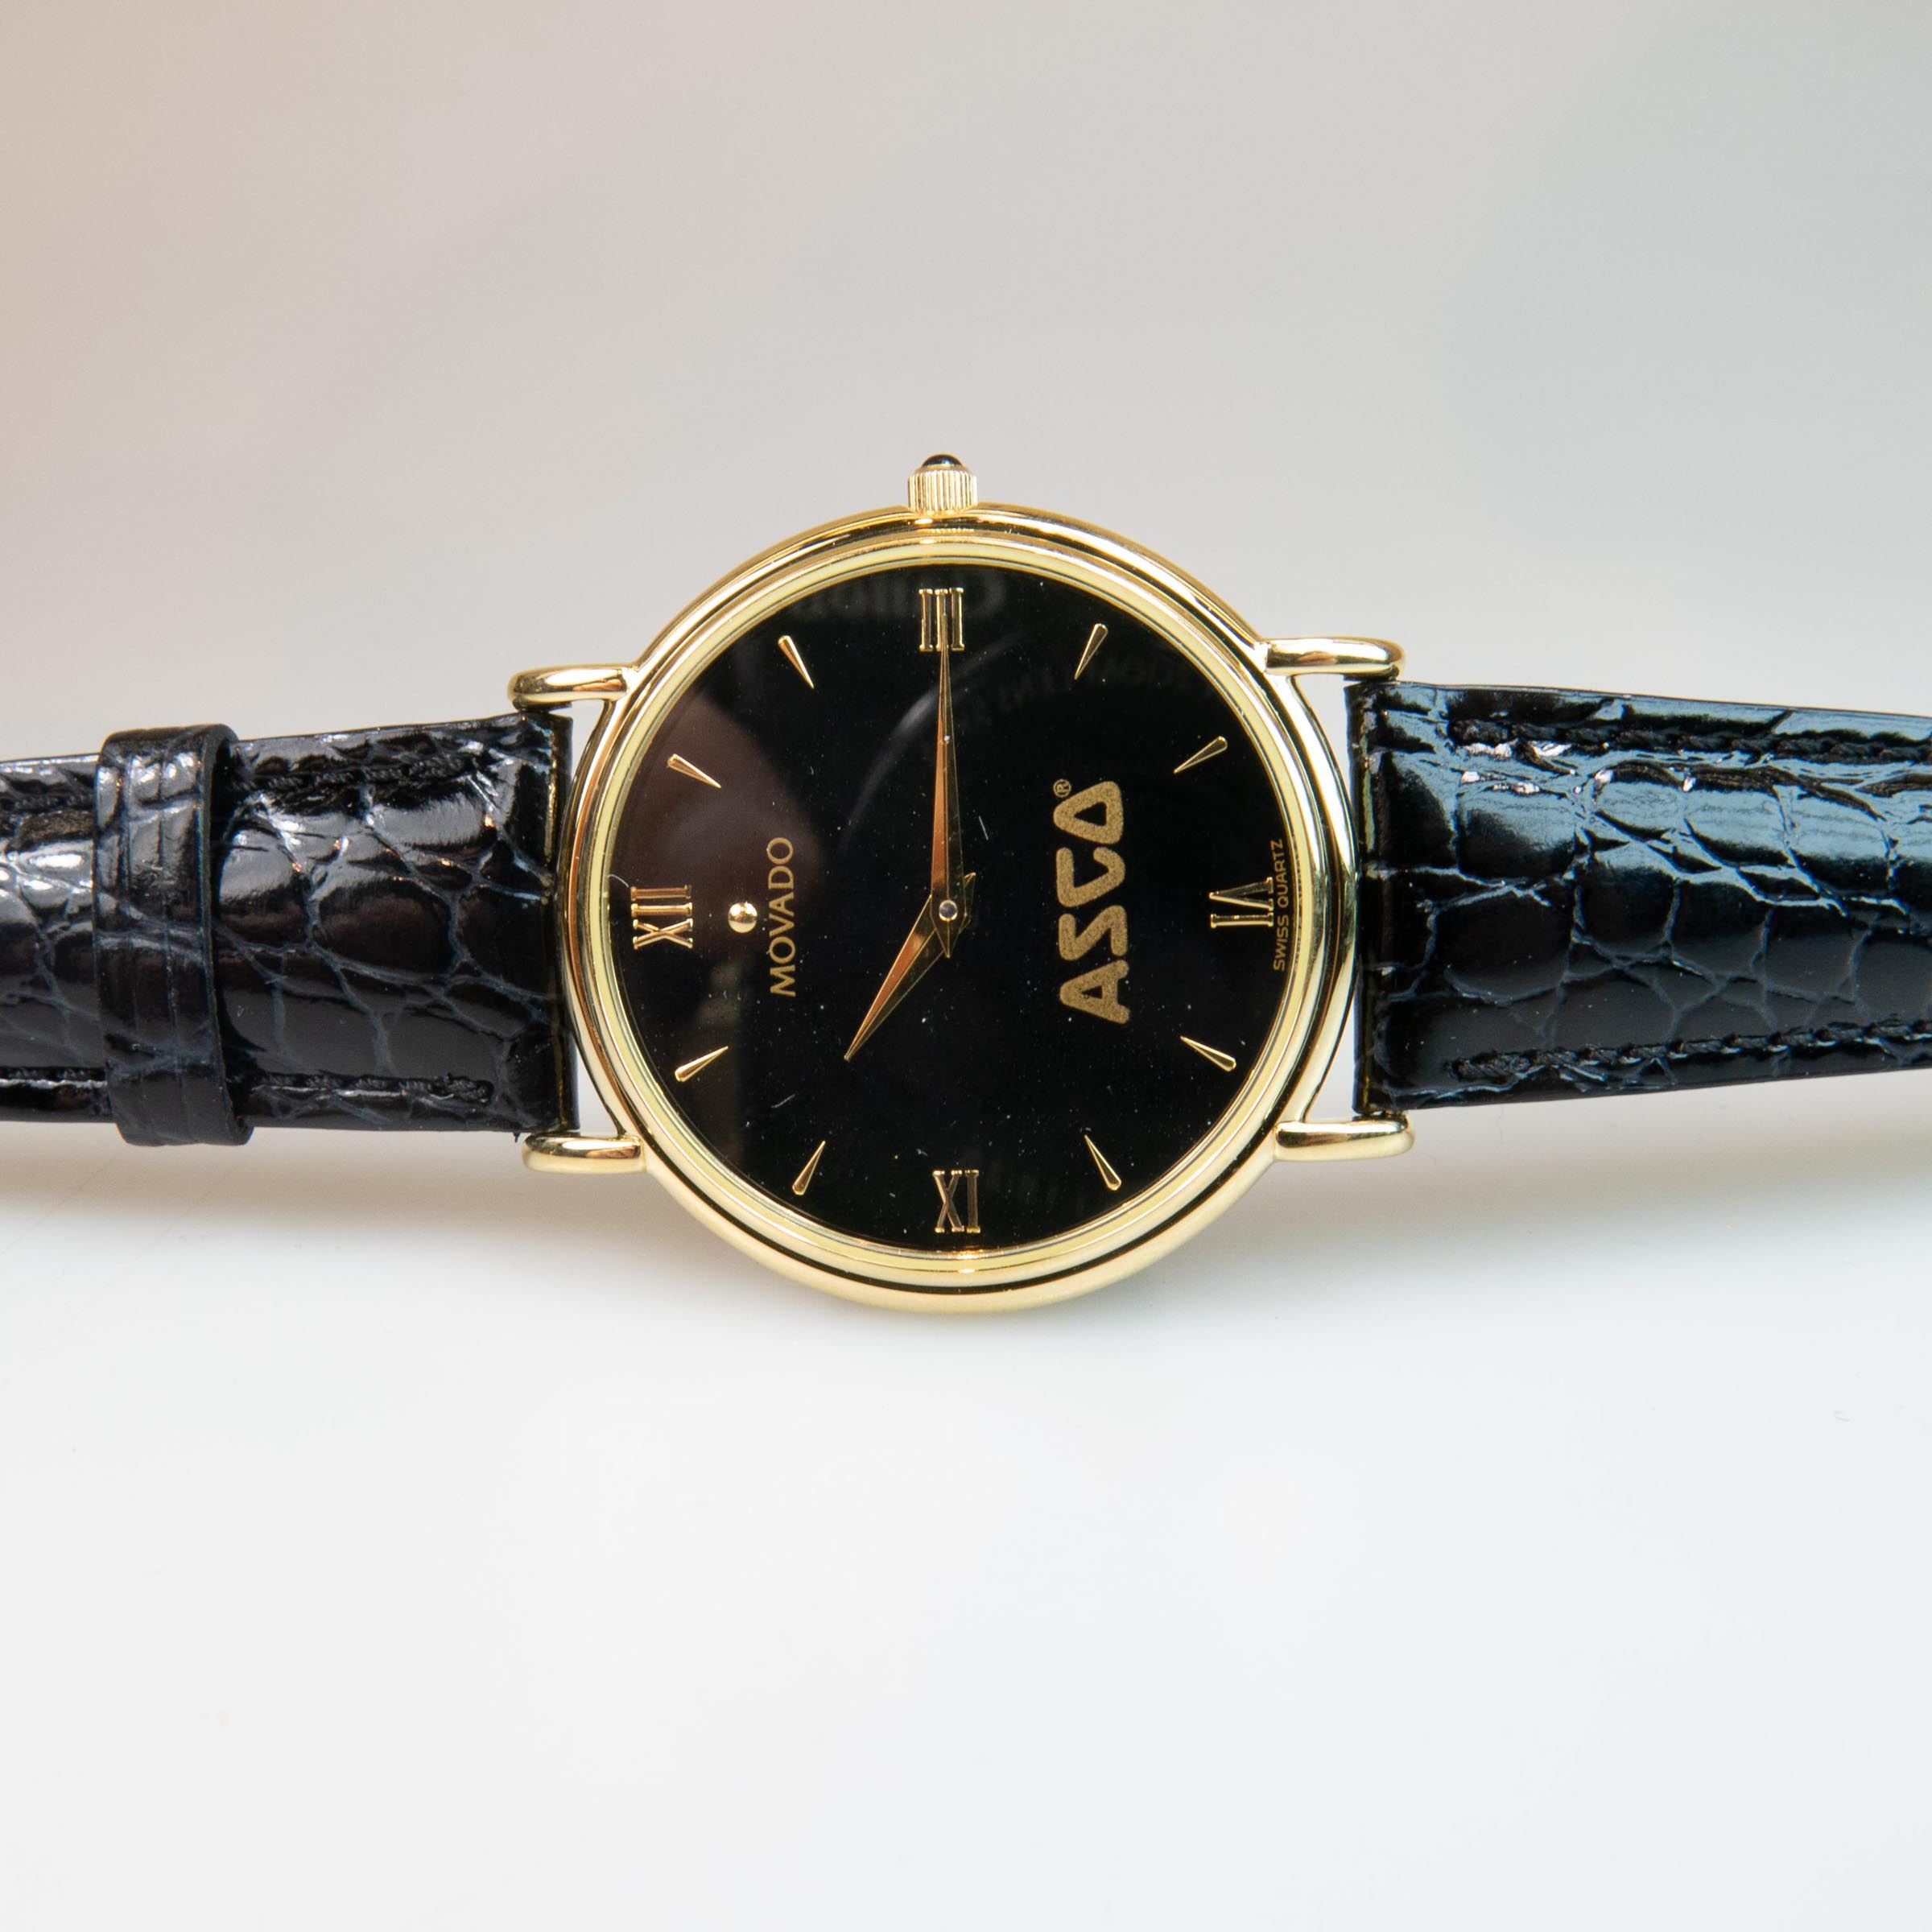 Movado 'Museum' Wristwatch